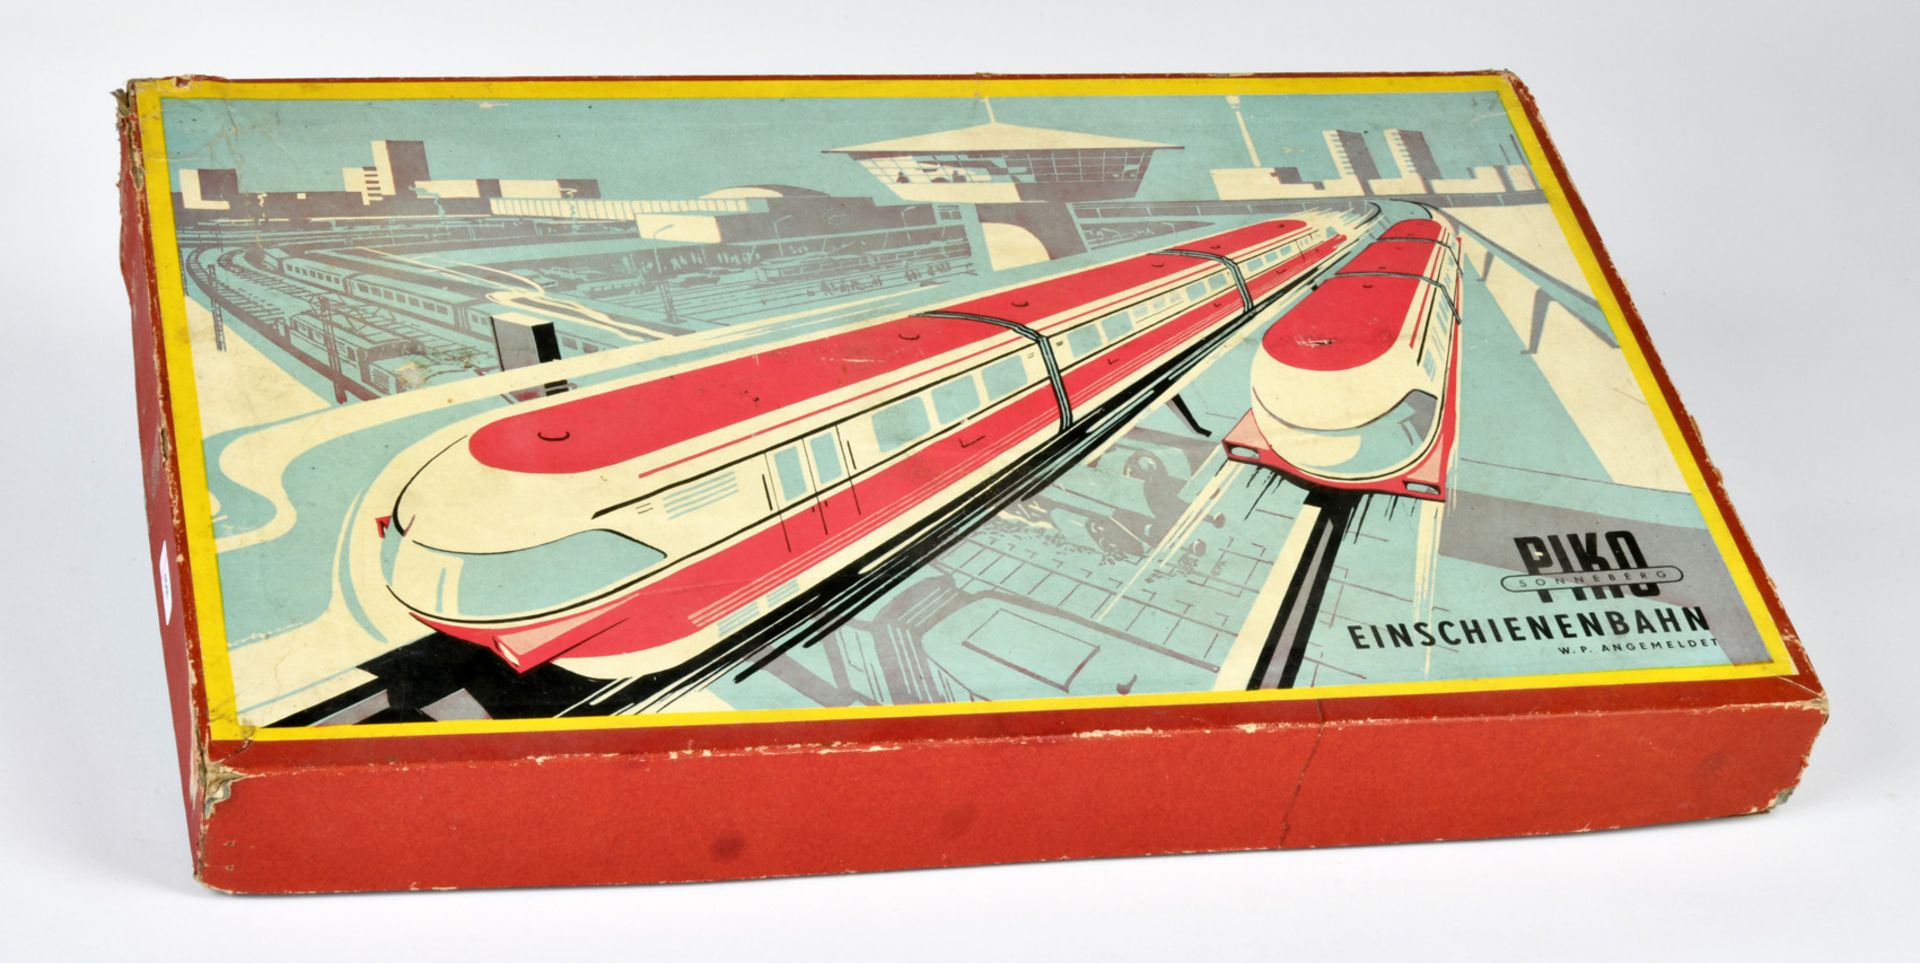 Piko, monorail, DDR, box 45 x 29 cm, box C 2, C 2+ - Image 2 of 2